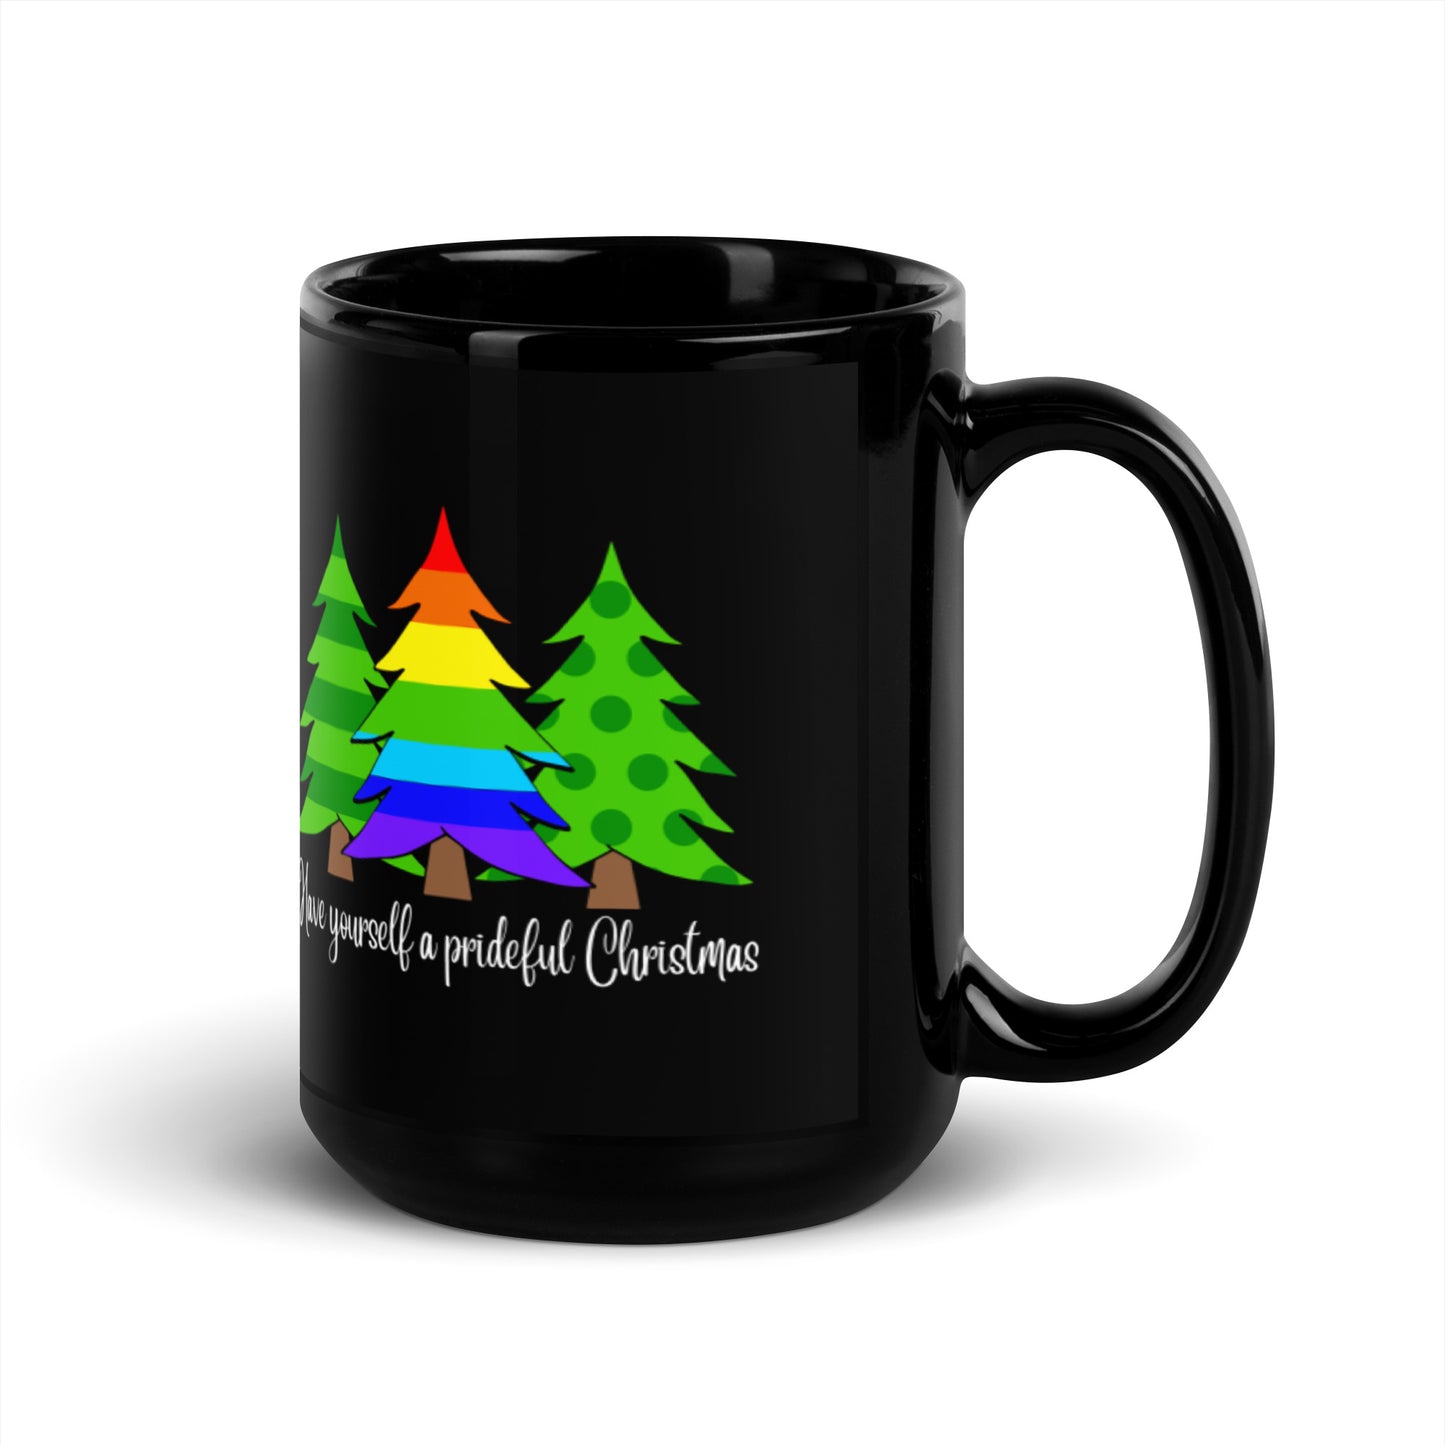 Have Yourself a Prideful Christmas Black Glossy Mug - gay pride apparel